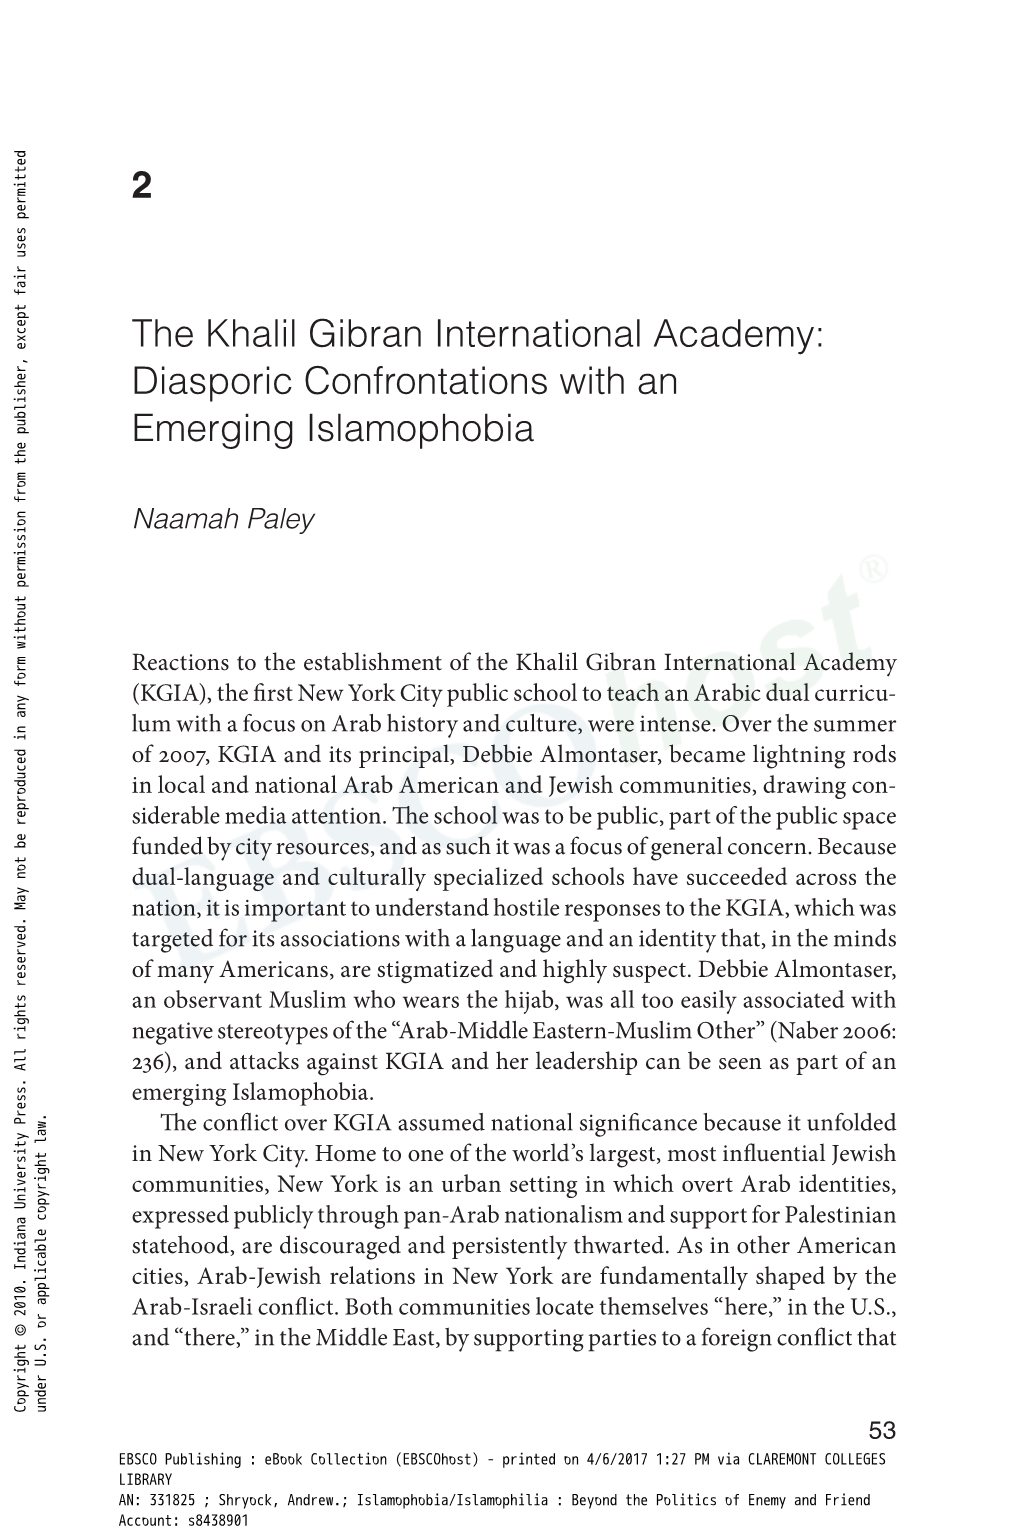 Khalil Gibran International Academy: Diasporic Confrontations with an Emerging Islamophobia